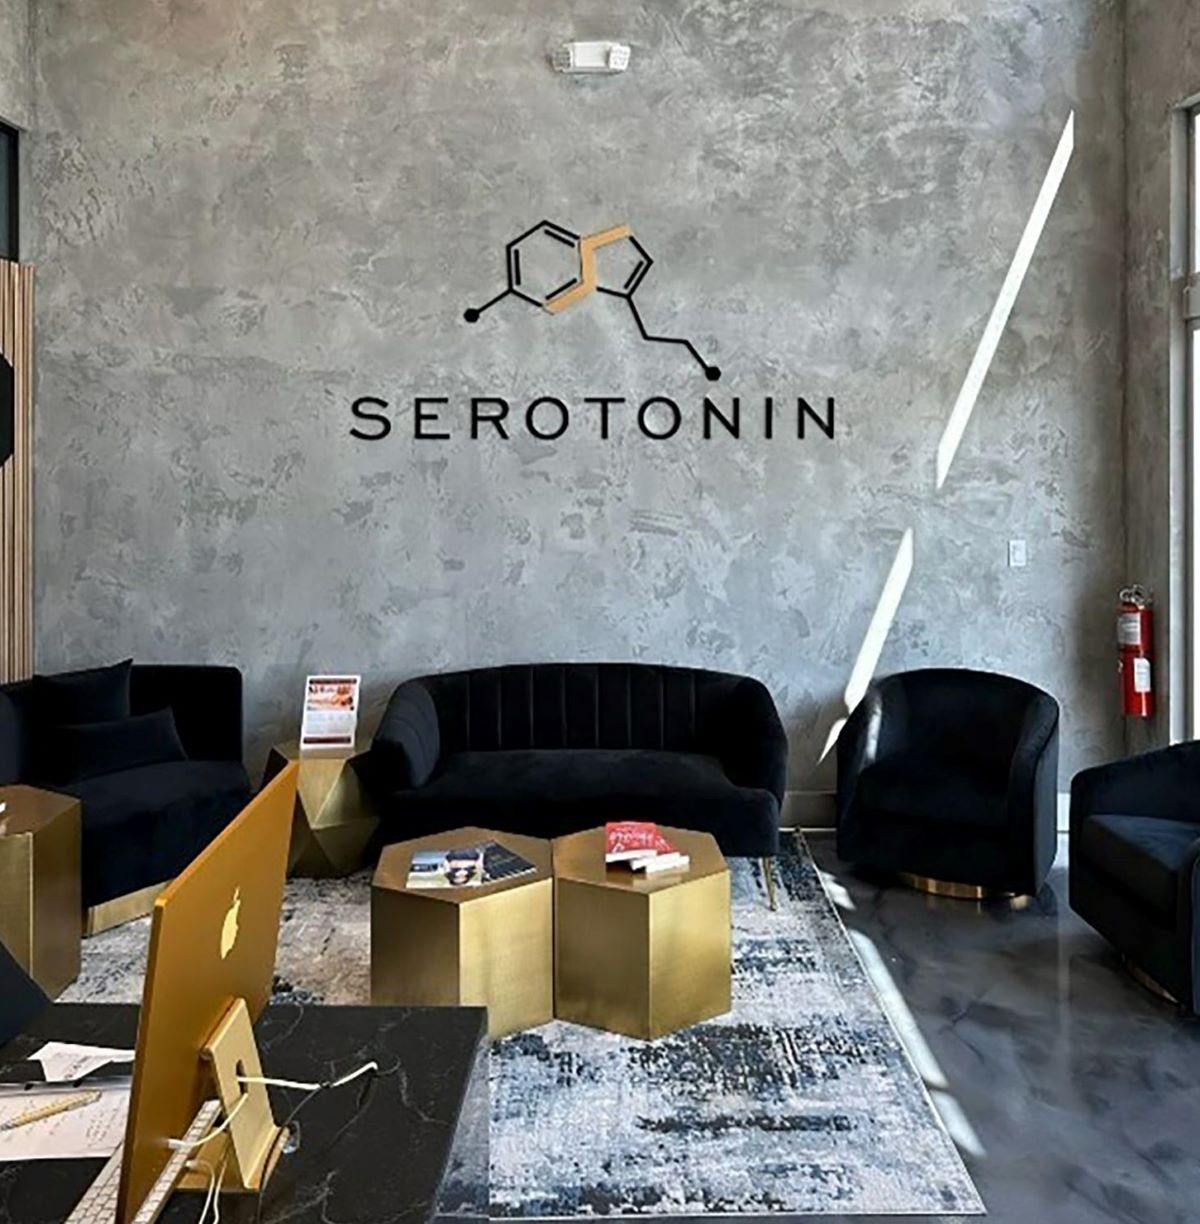 Serotonin center